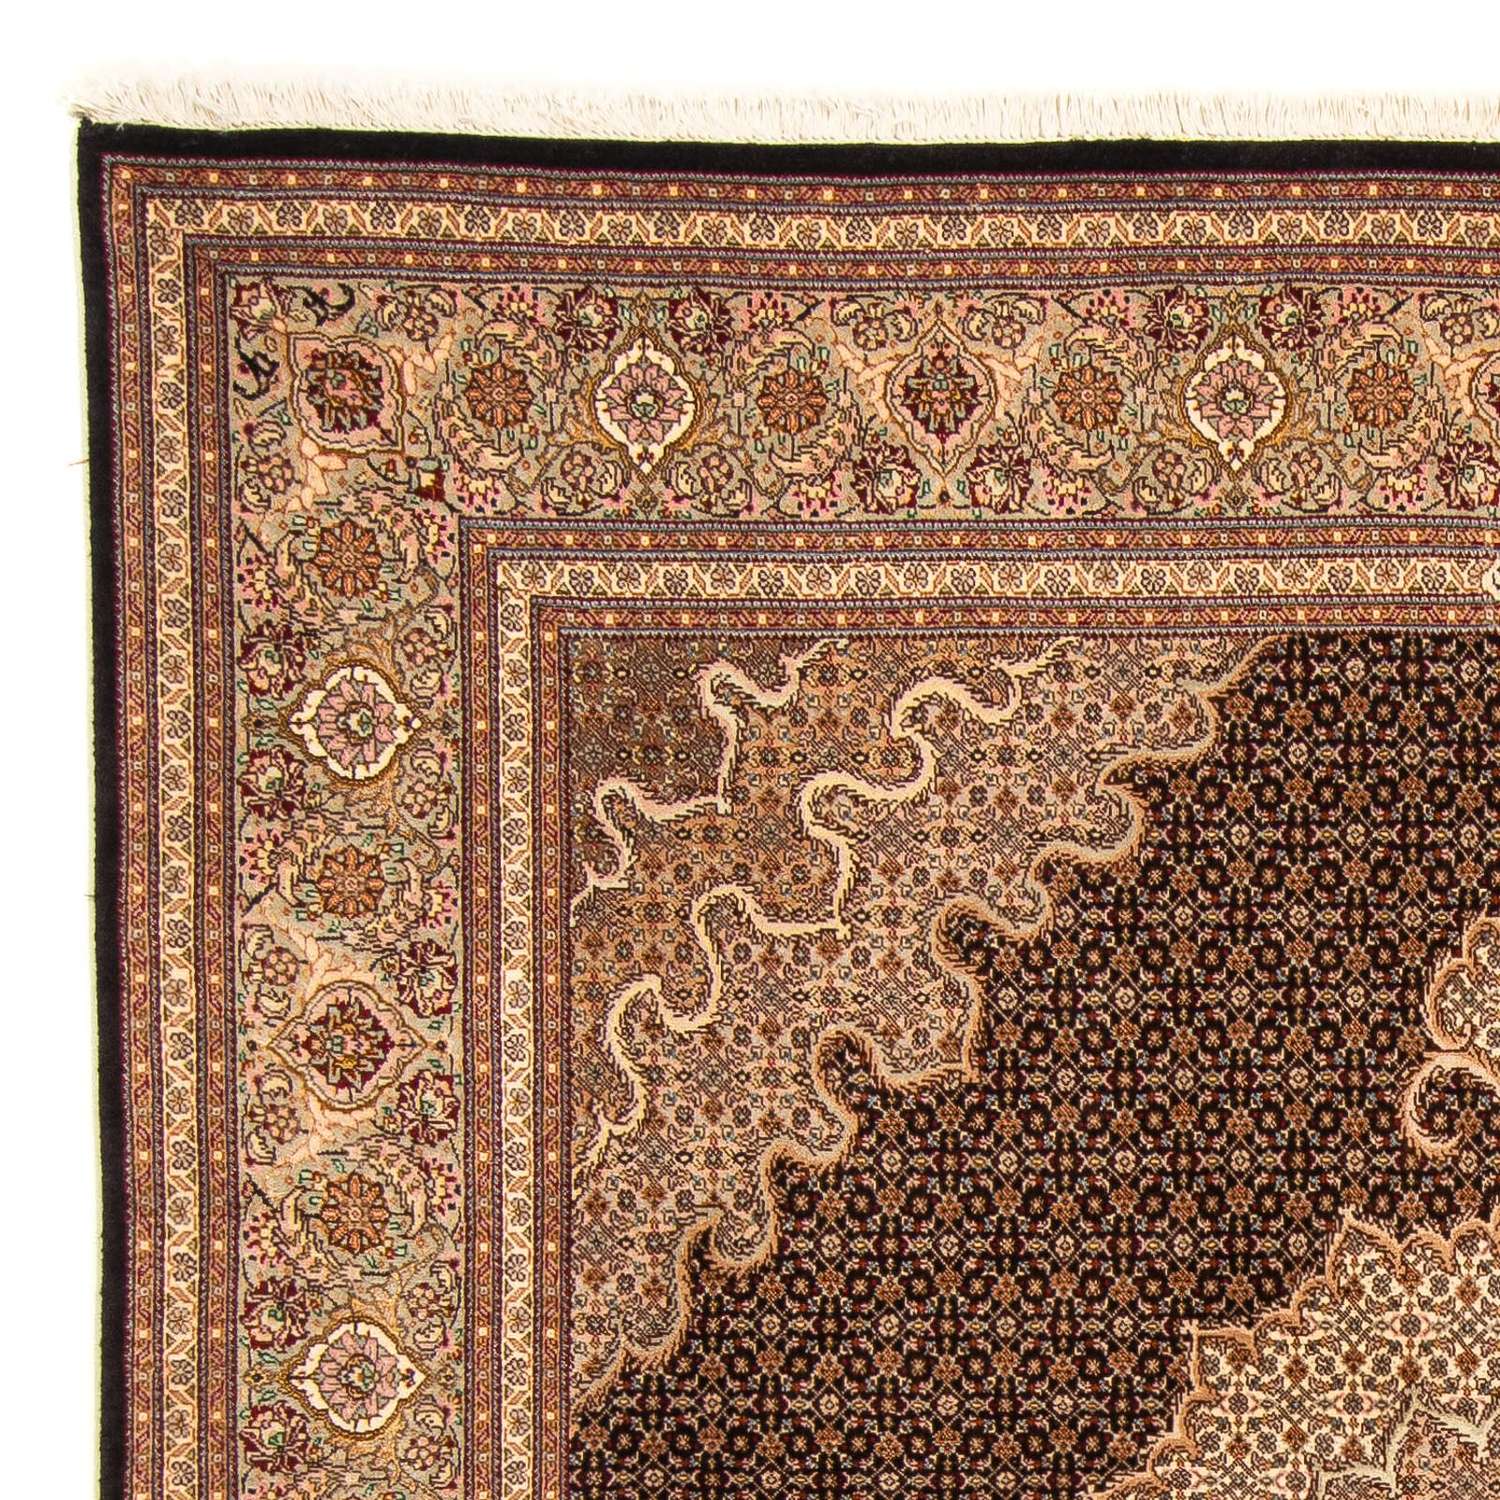 Tapis persan - Tabriz carré  - 210 x 200 cm - marron clair